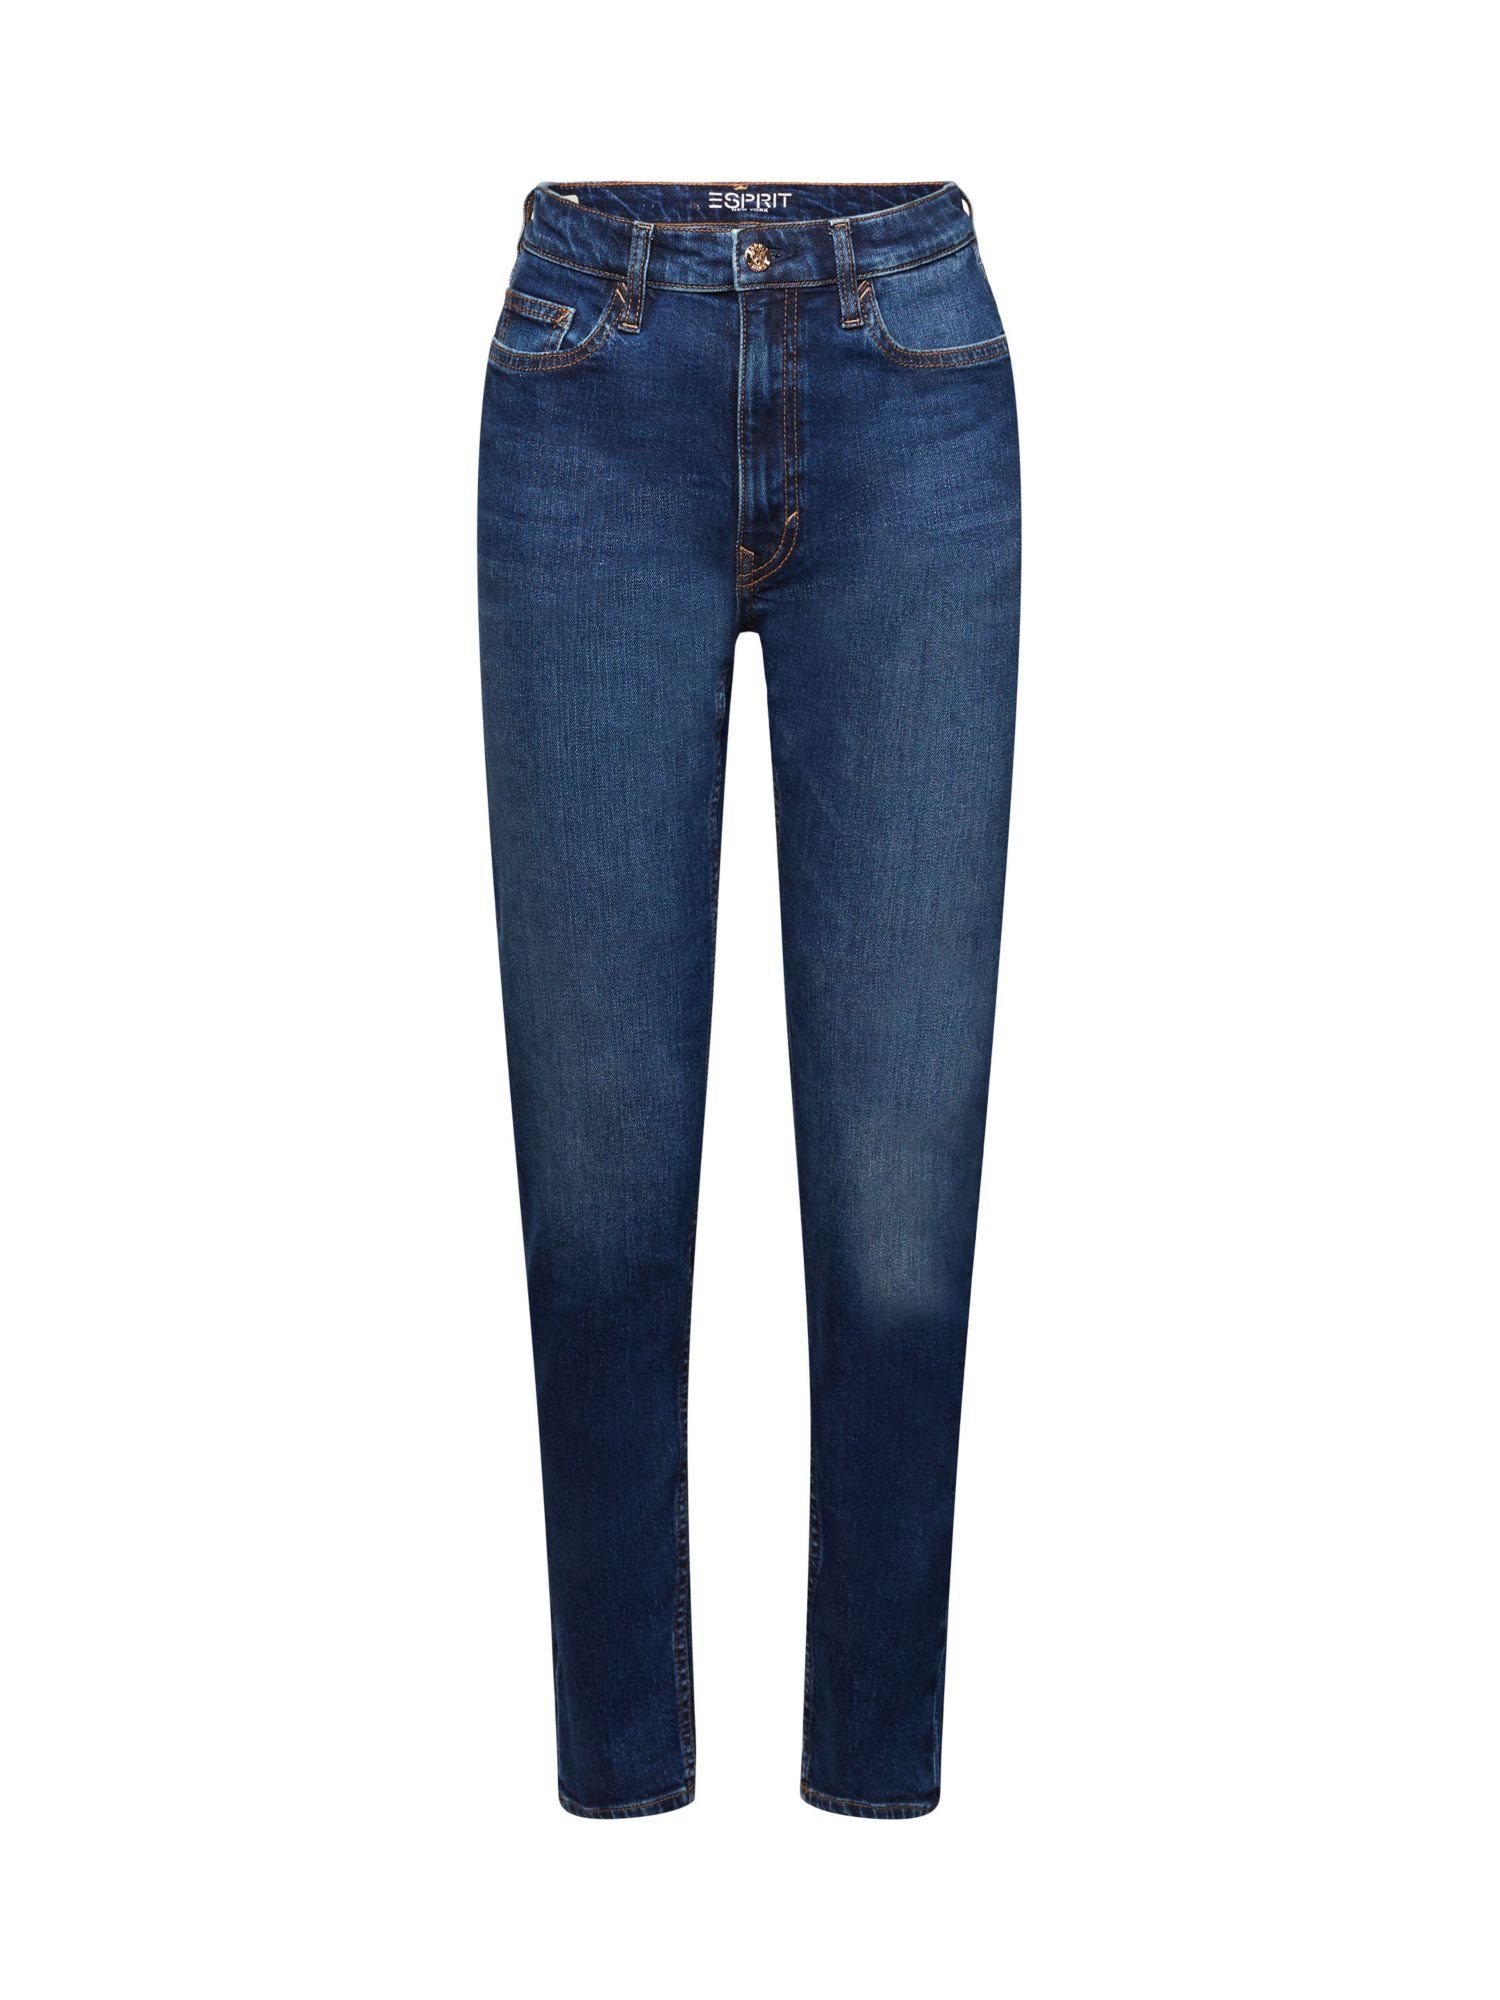 hohem mit Bund Bequeme Jeans Esprit Retro-Classic-Jeans